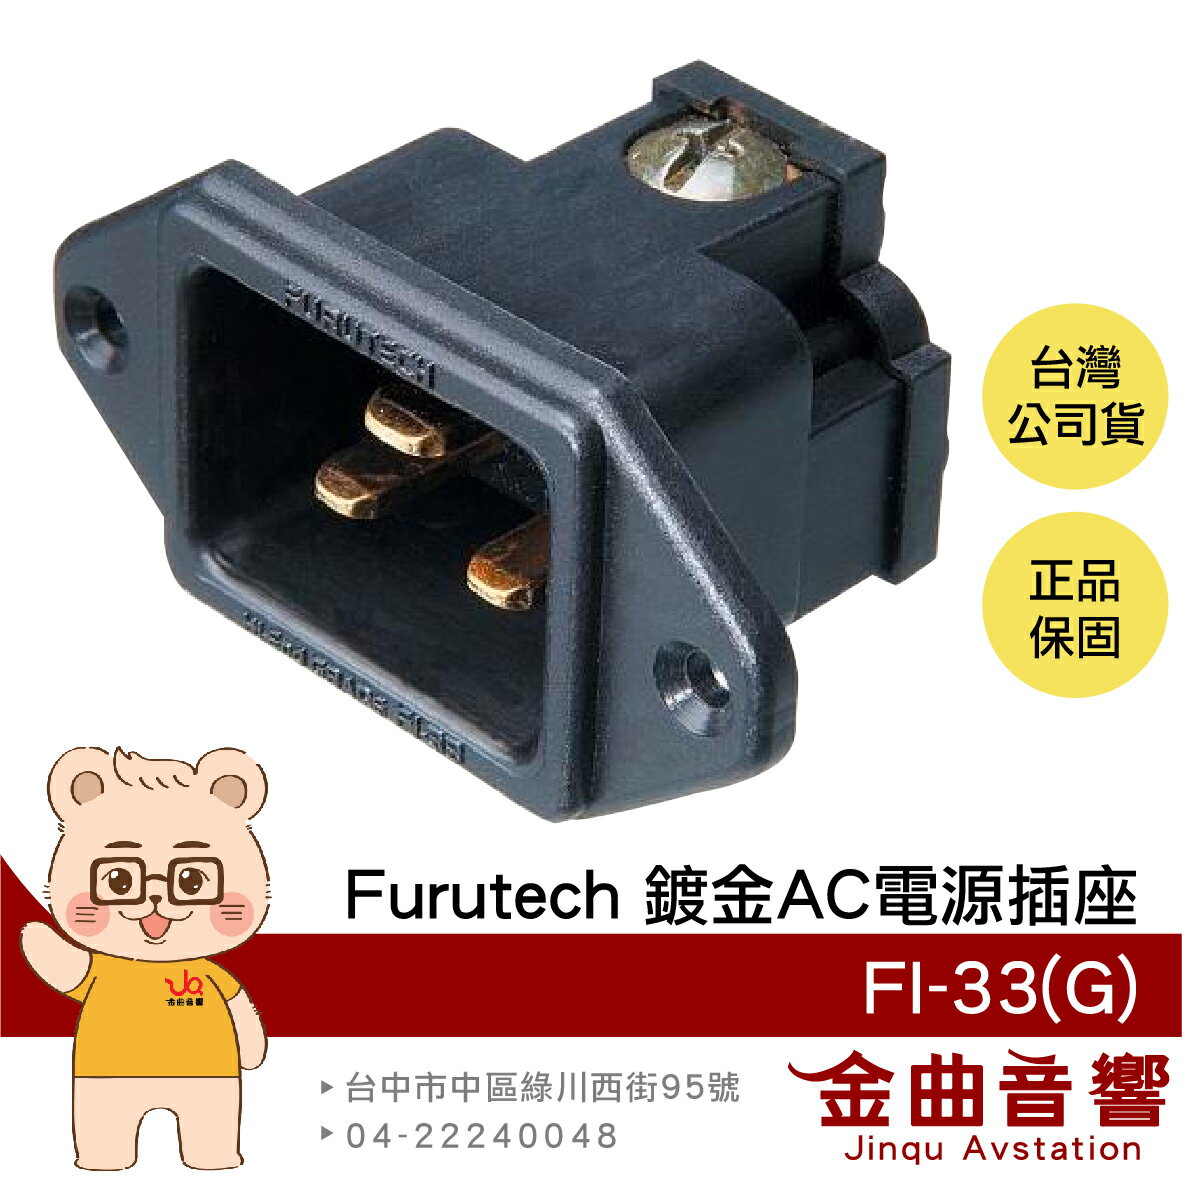 FURUTECH 古河 FI-33(G) 鍍金 20A AC 電源插座 | 金曲音響